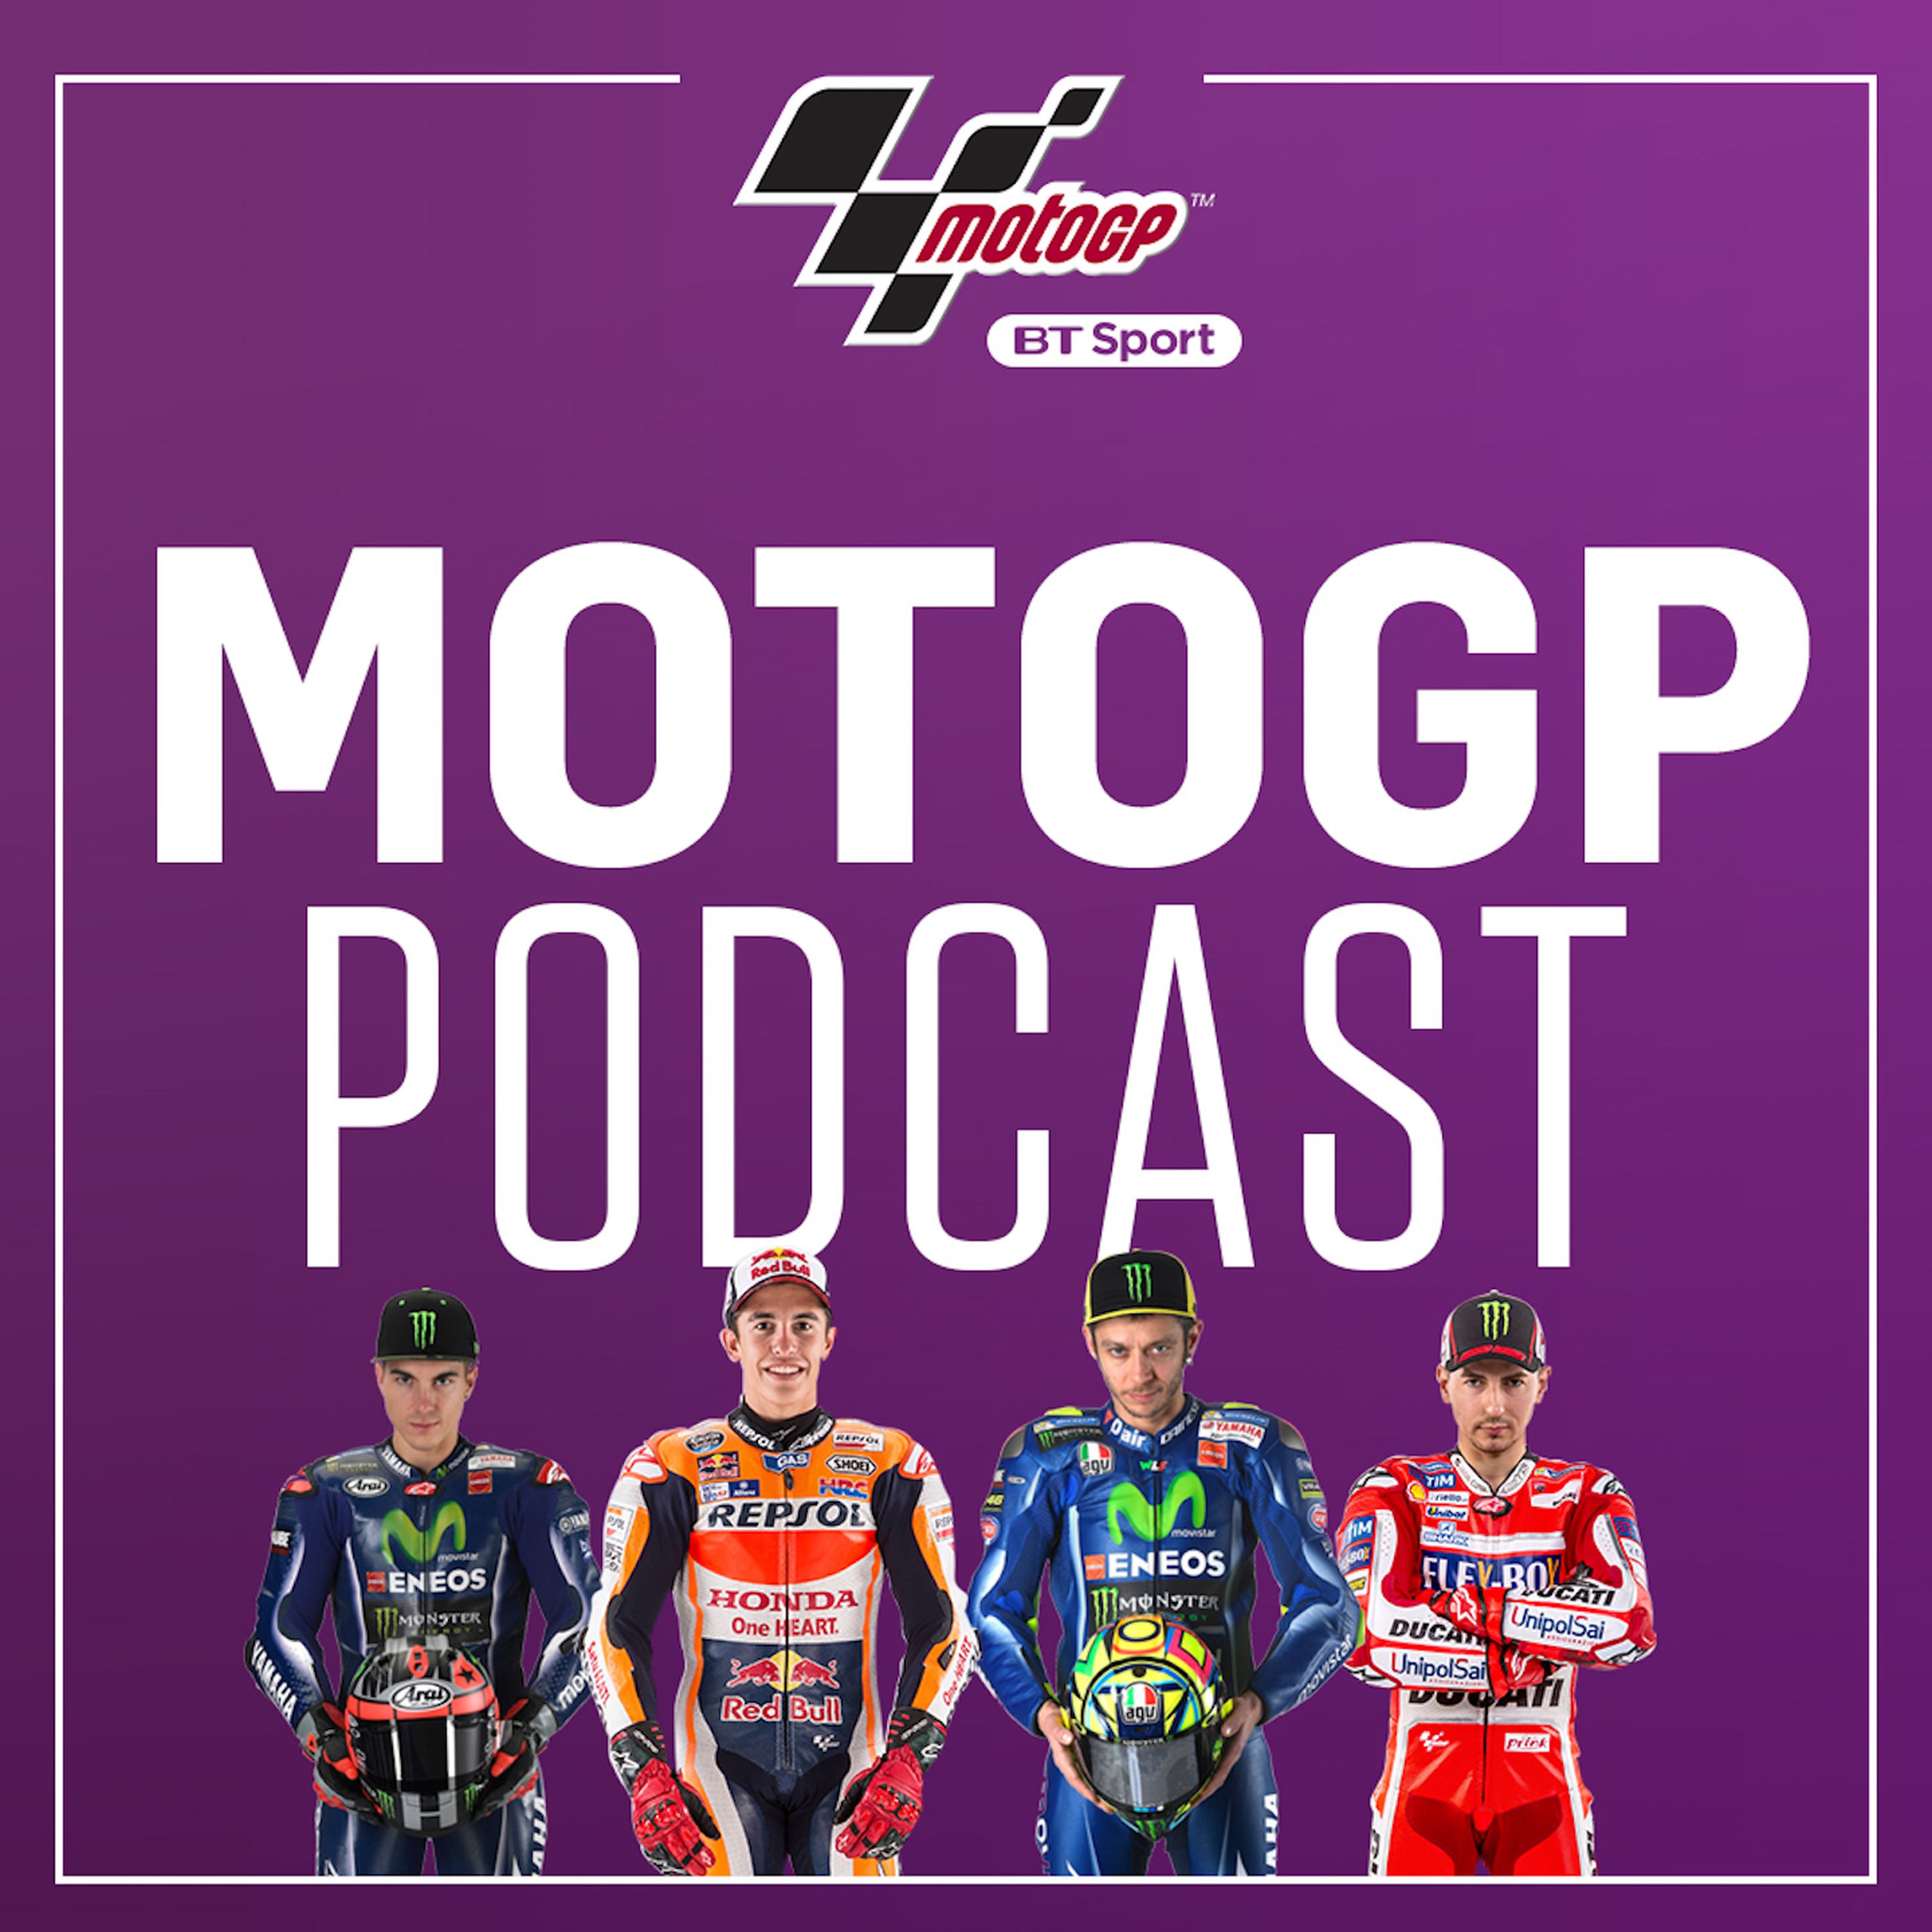 Dovi wins a classic BT Sport MotoGP Podcast on Acast